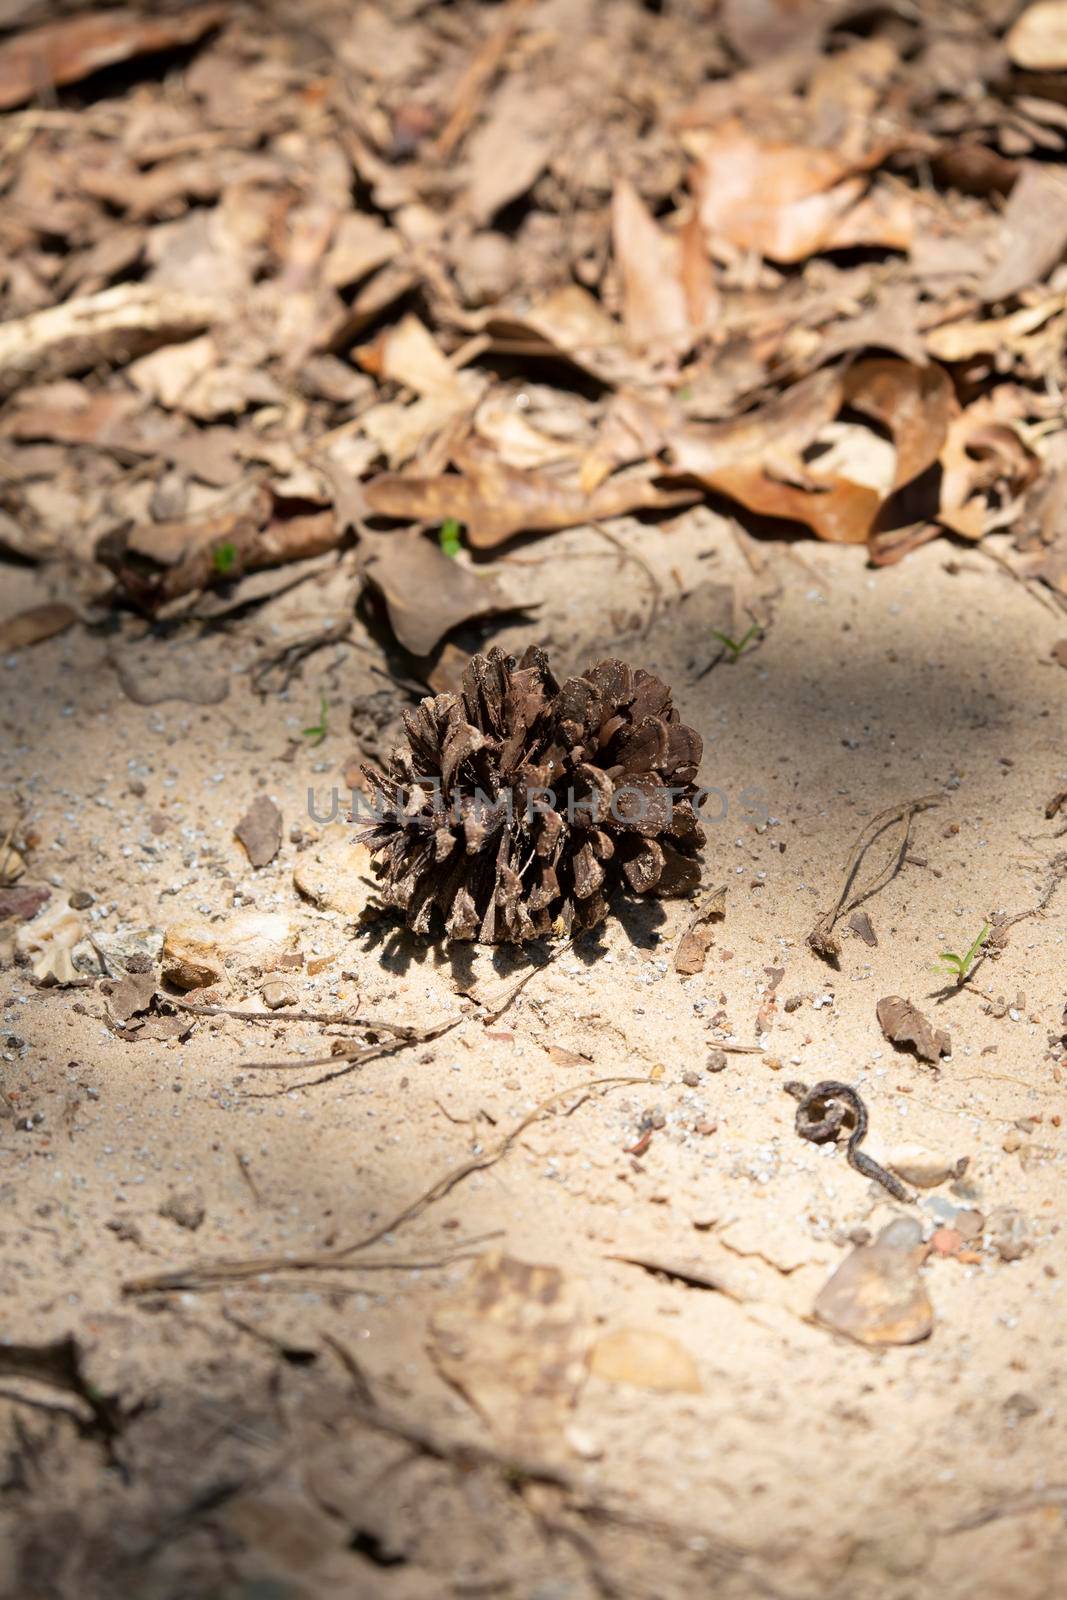 Pine cone in dirt near dead brown leaves